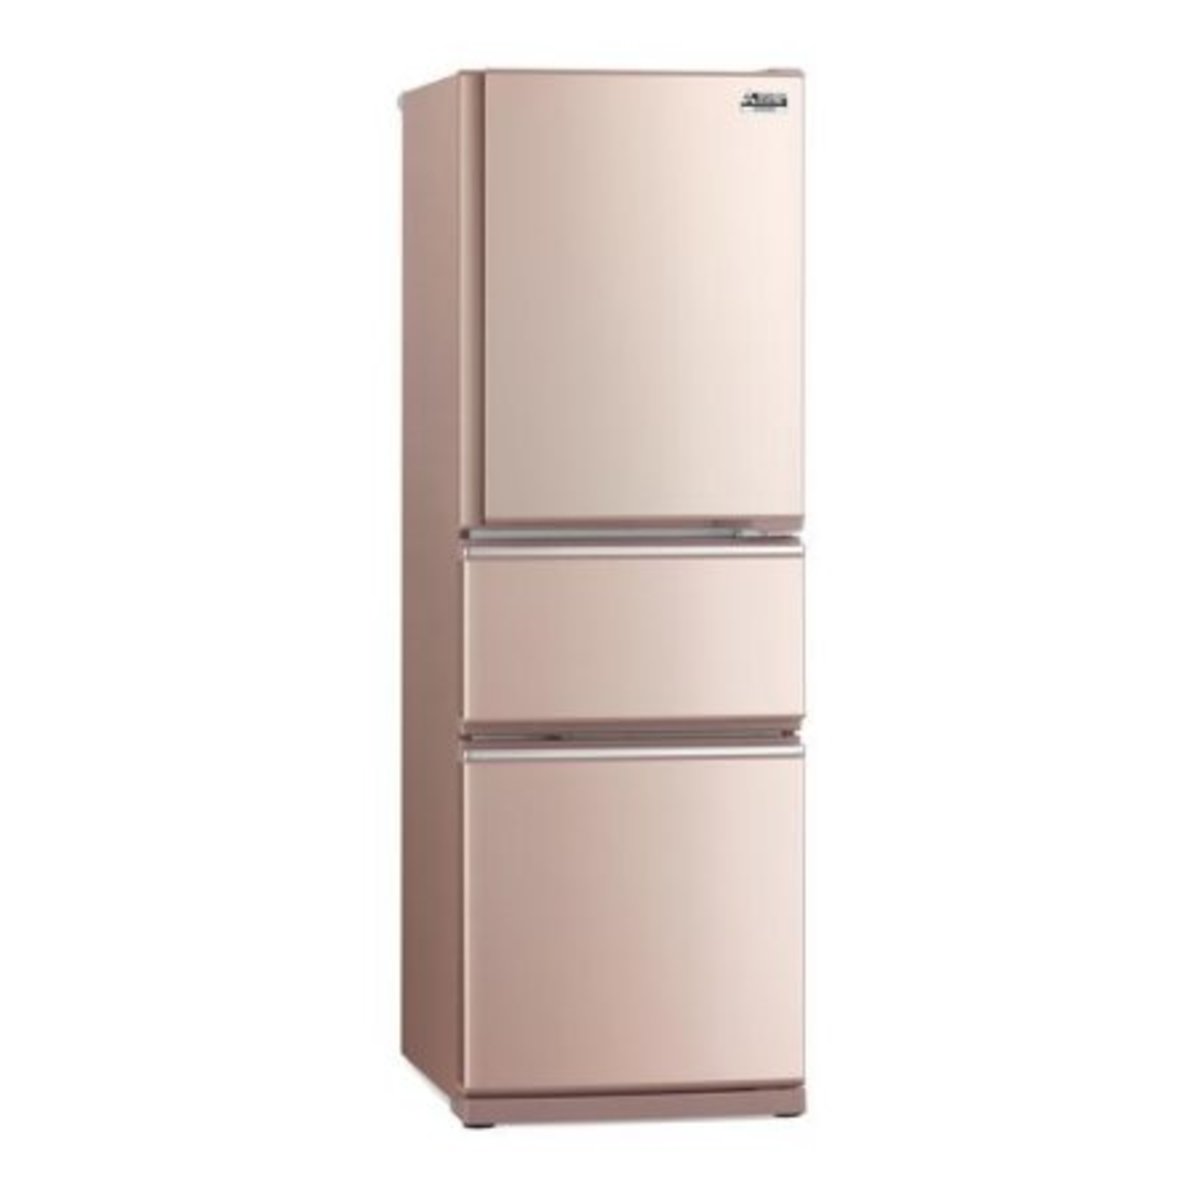 MRCX35EMPSH ISO Standard Total Capacity 214 L Three doors Inverter Refrigerator (Peach Silver Color)